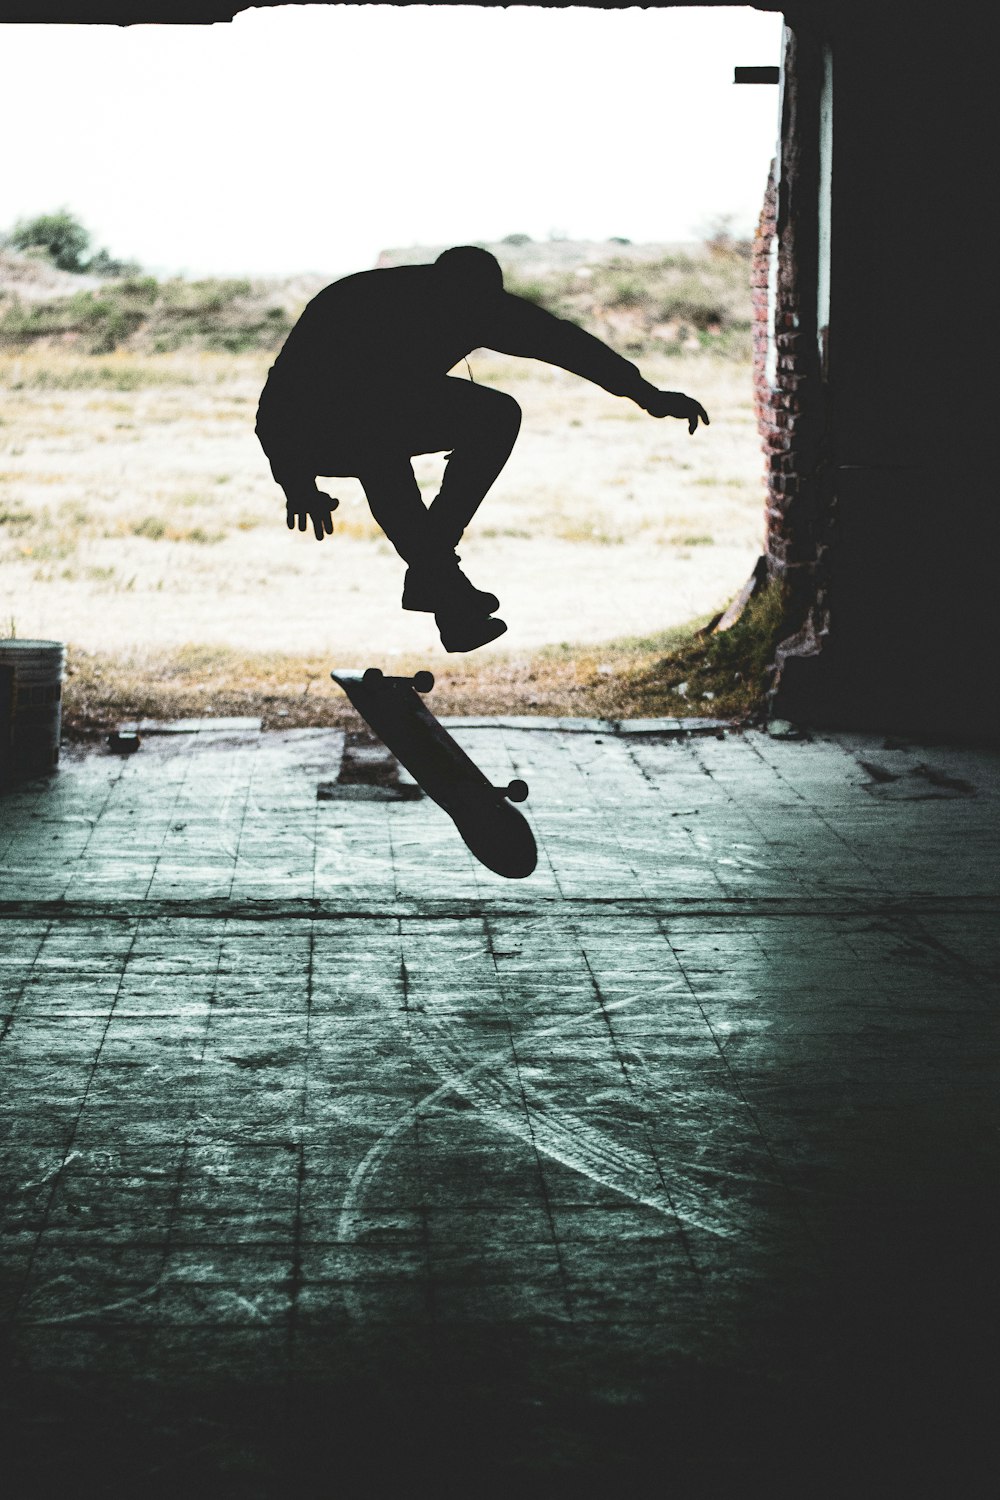 person doing skateboard stunts